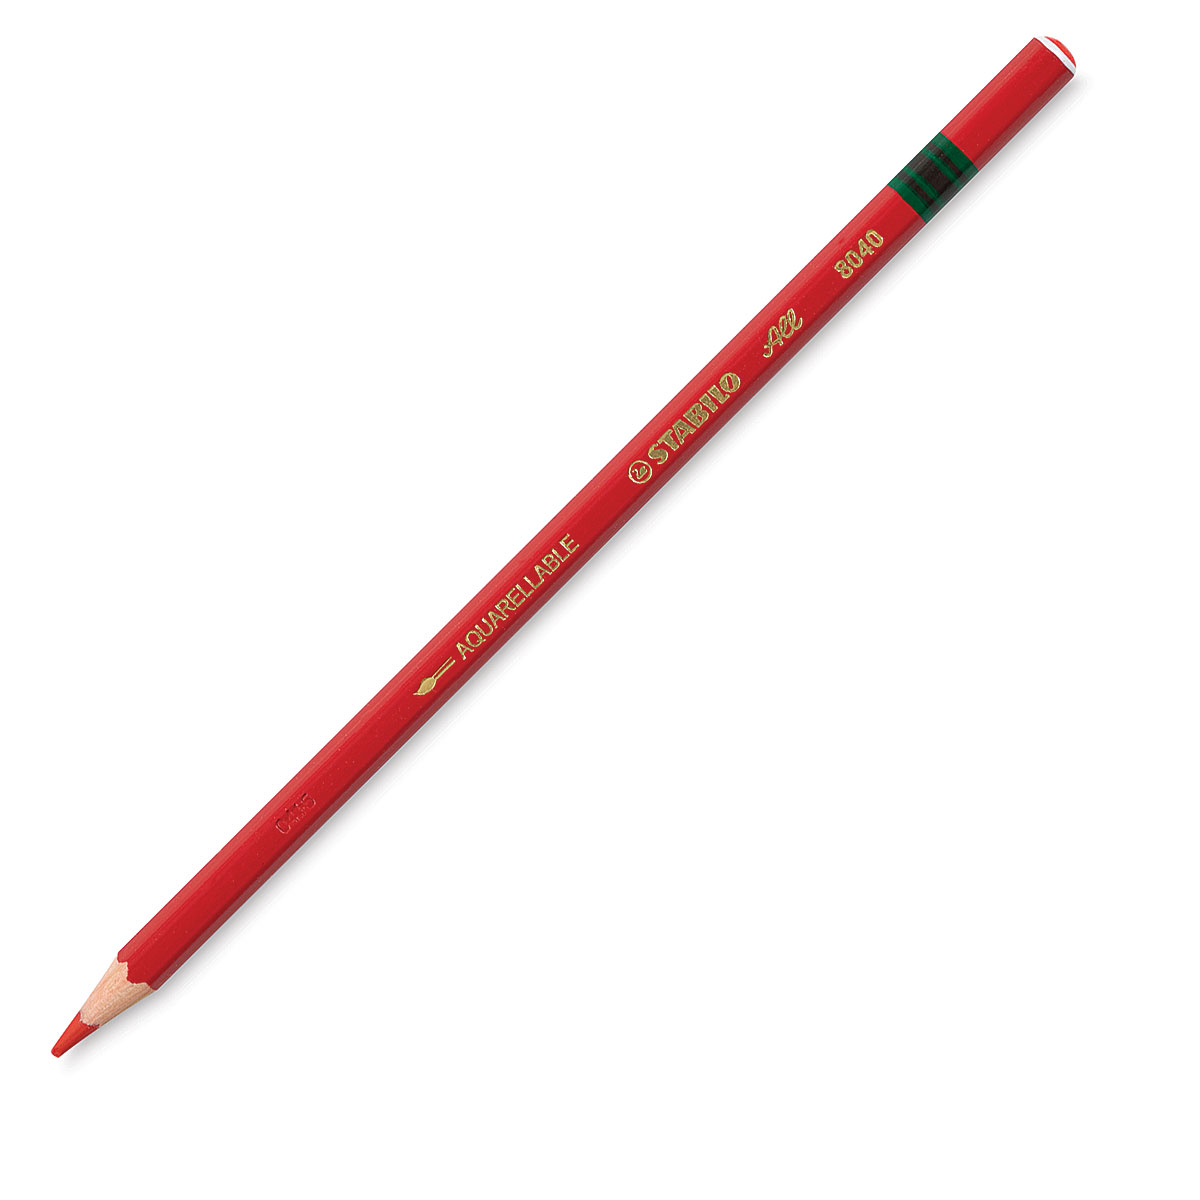 All-Stabilo Drawing Pencils – Black